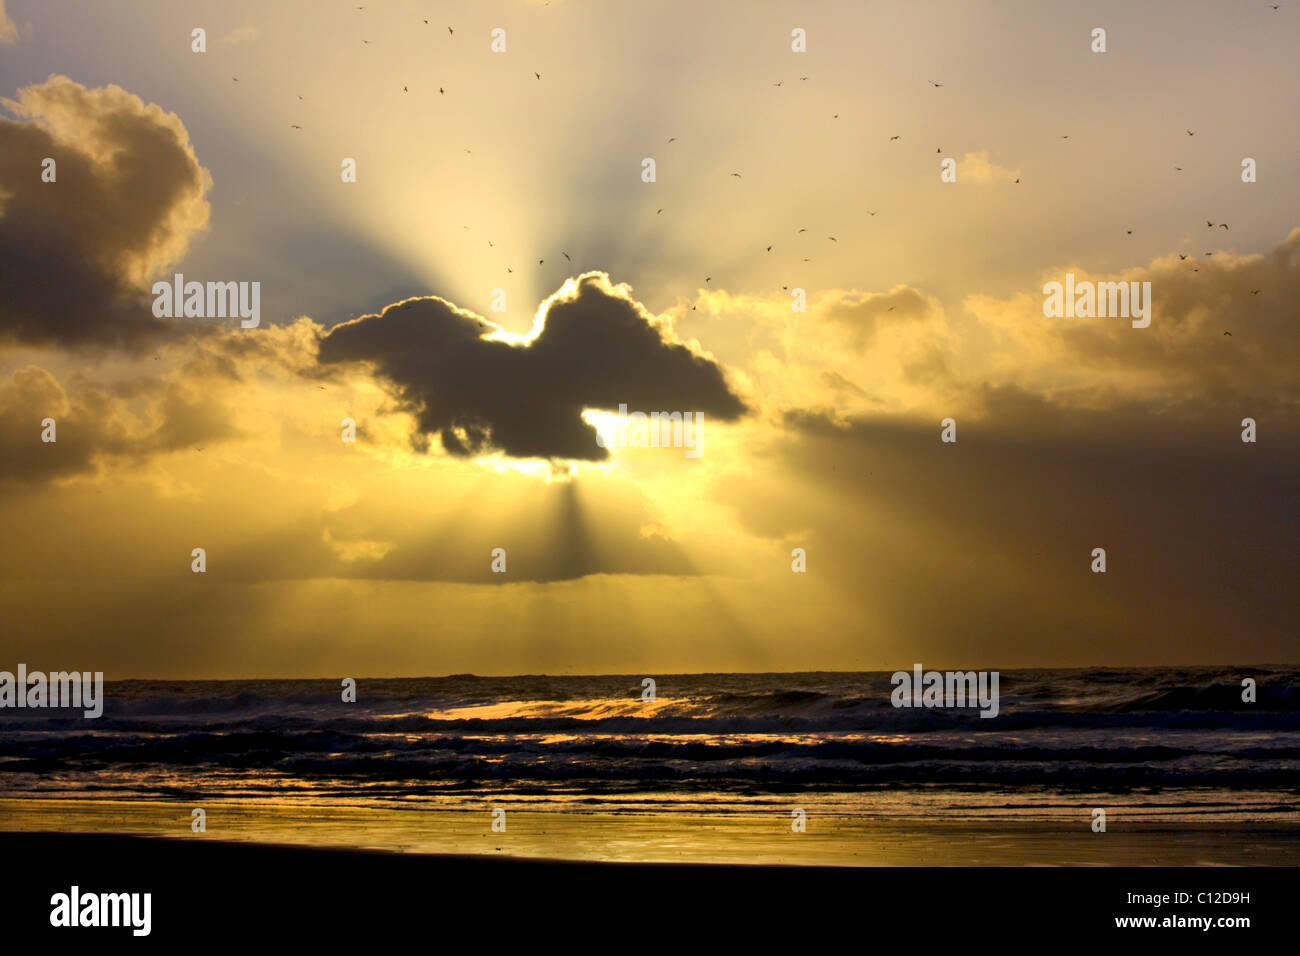 40,151.06068a Sun rays sunbeams flying birds seagulls gulls dark clouds cloud layers golden glow shining ocean waves beach, cloud like flying gull. Stock Photo